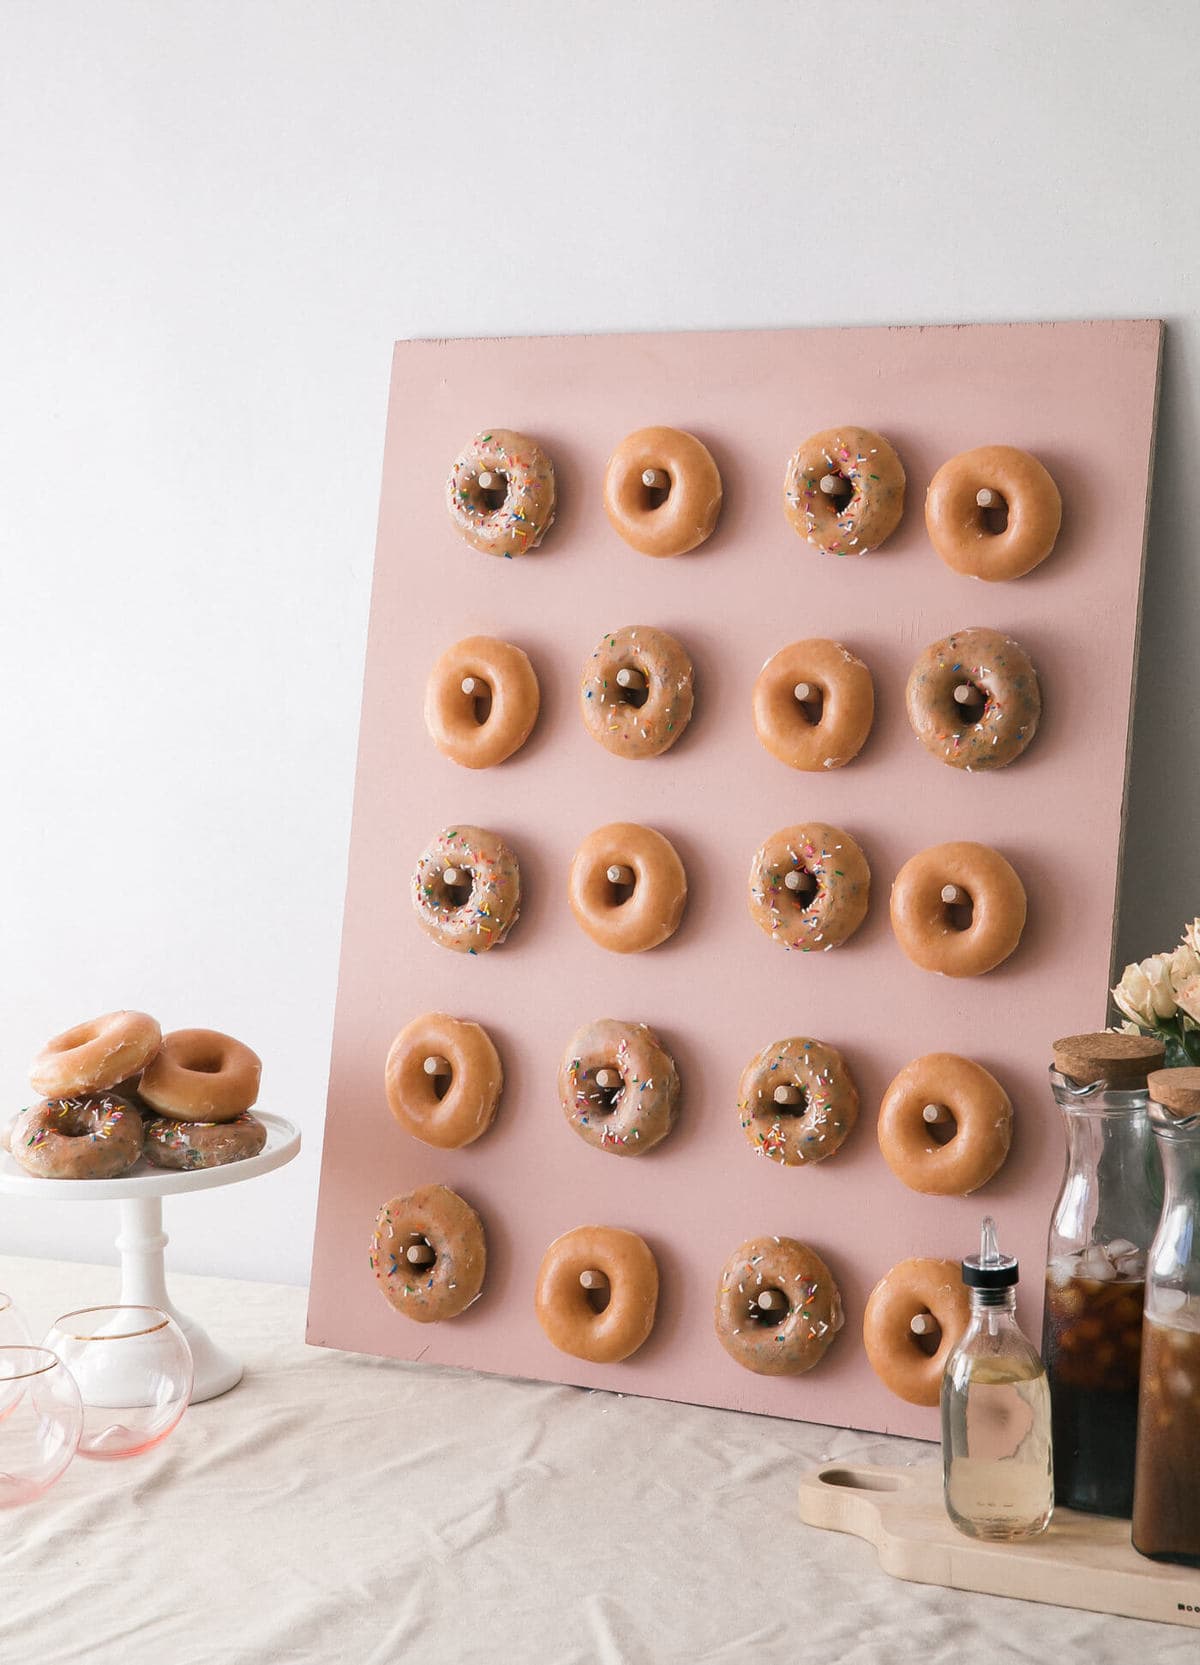 How to Make a Doughnut Wall